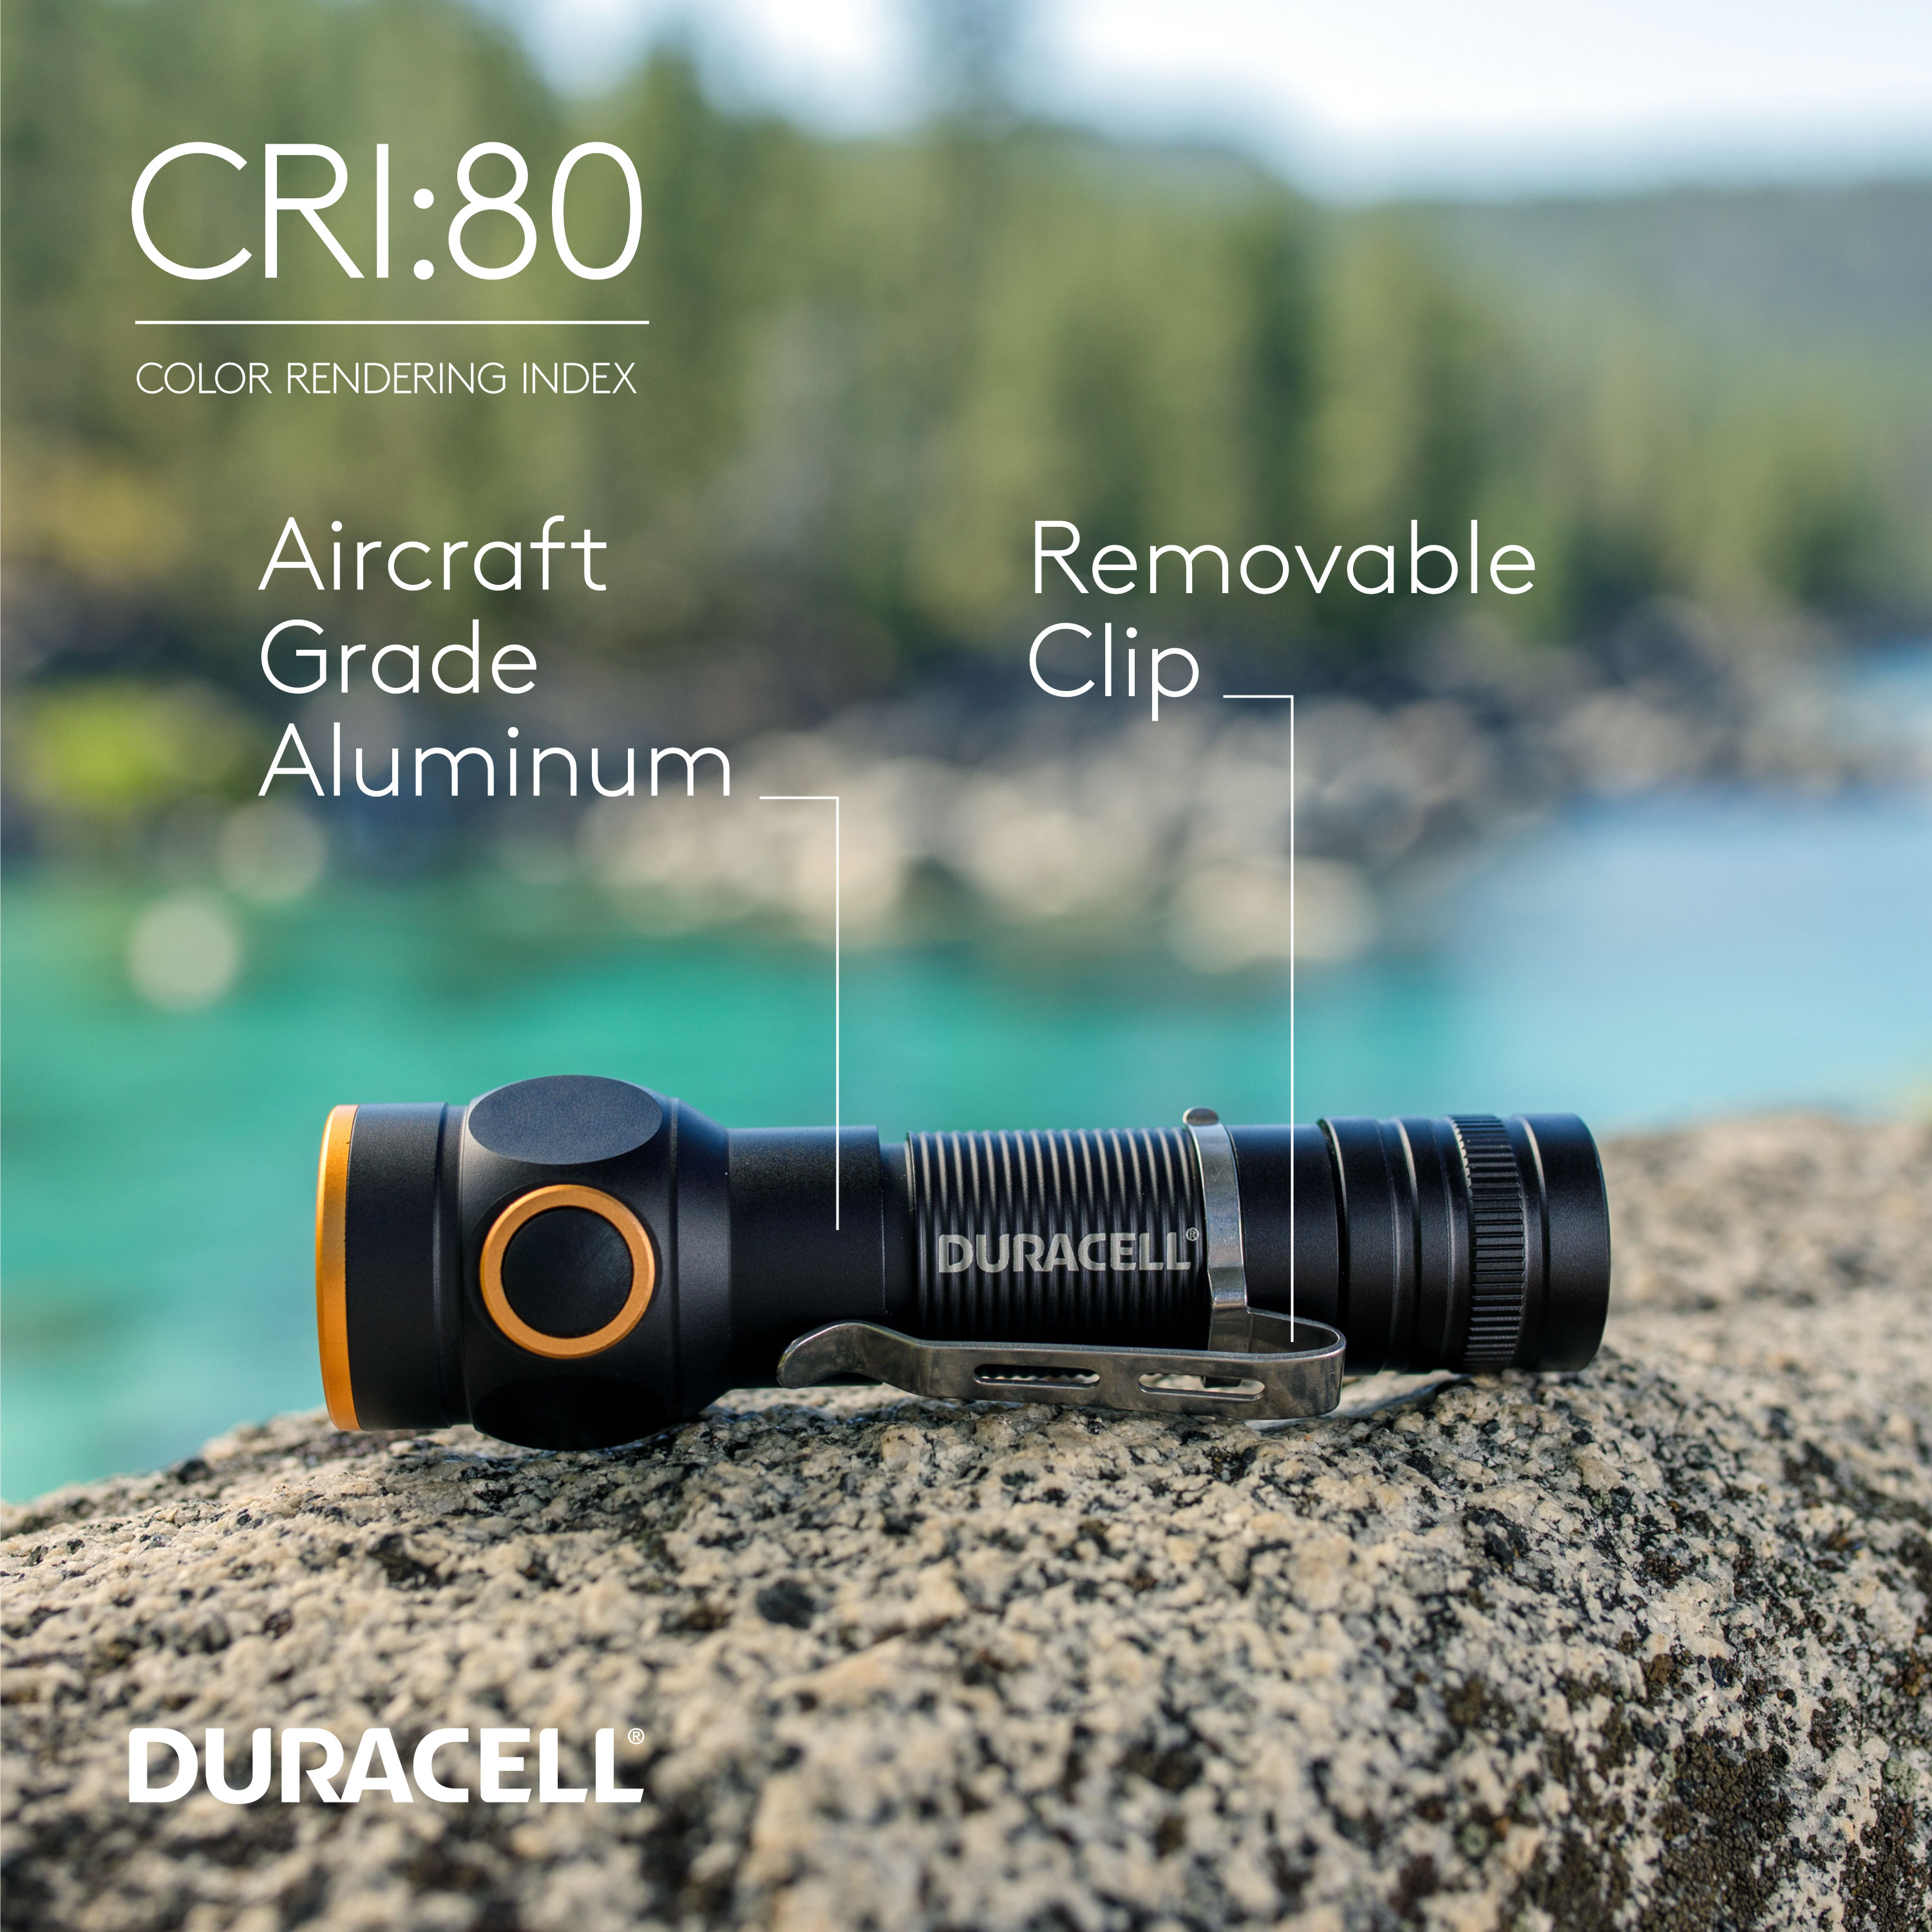 Duracell 60-060 Smart Power Self Powered LED V2 Flashlight Innovative Concepts 